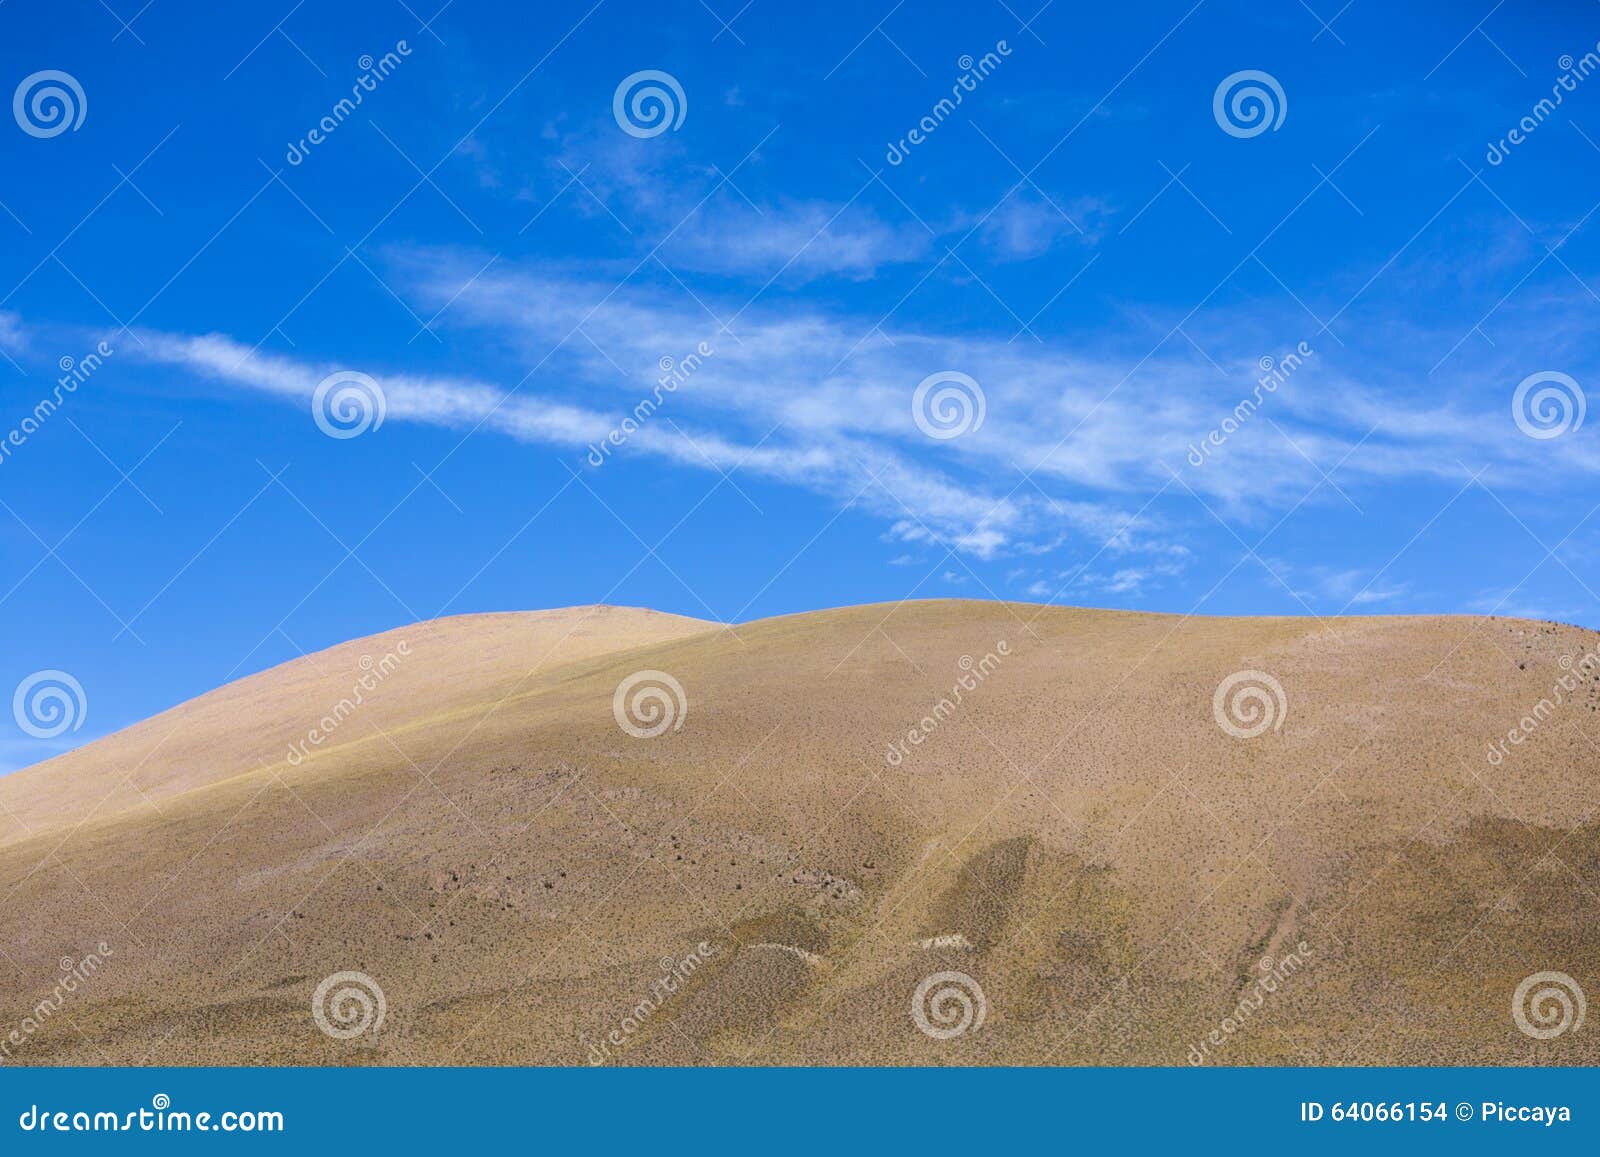 atacama mountain with blue sky in eduardo avaroa park